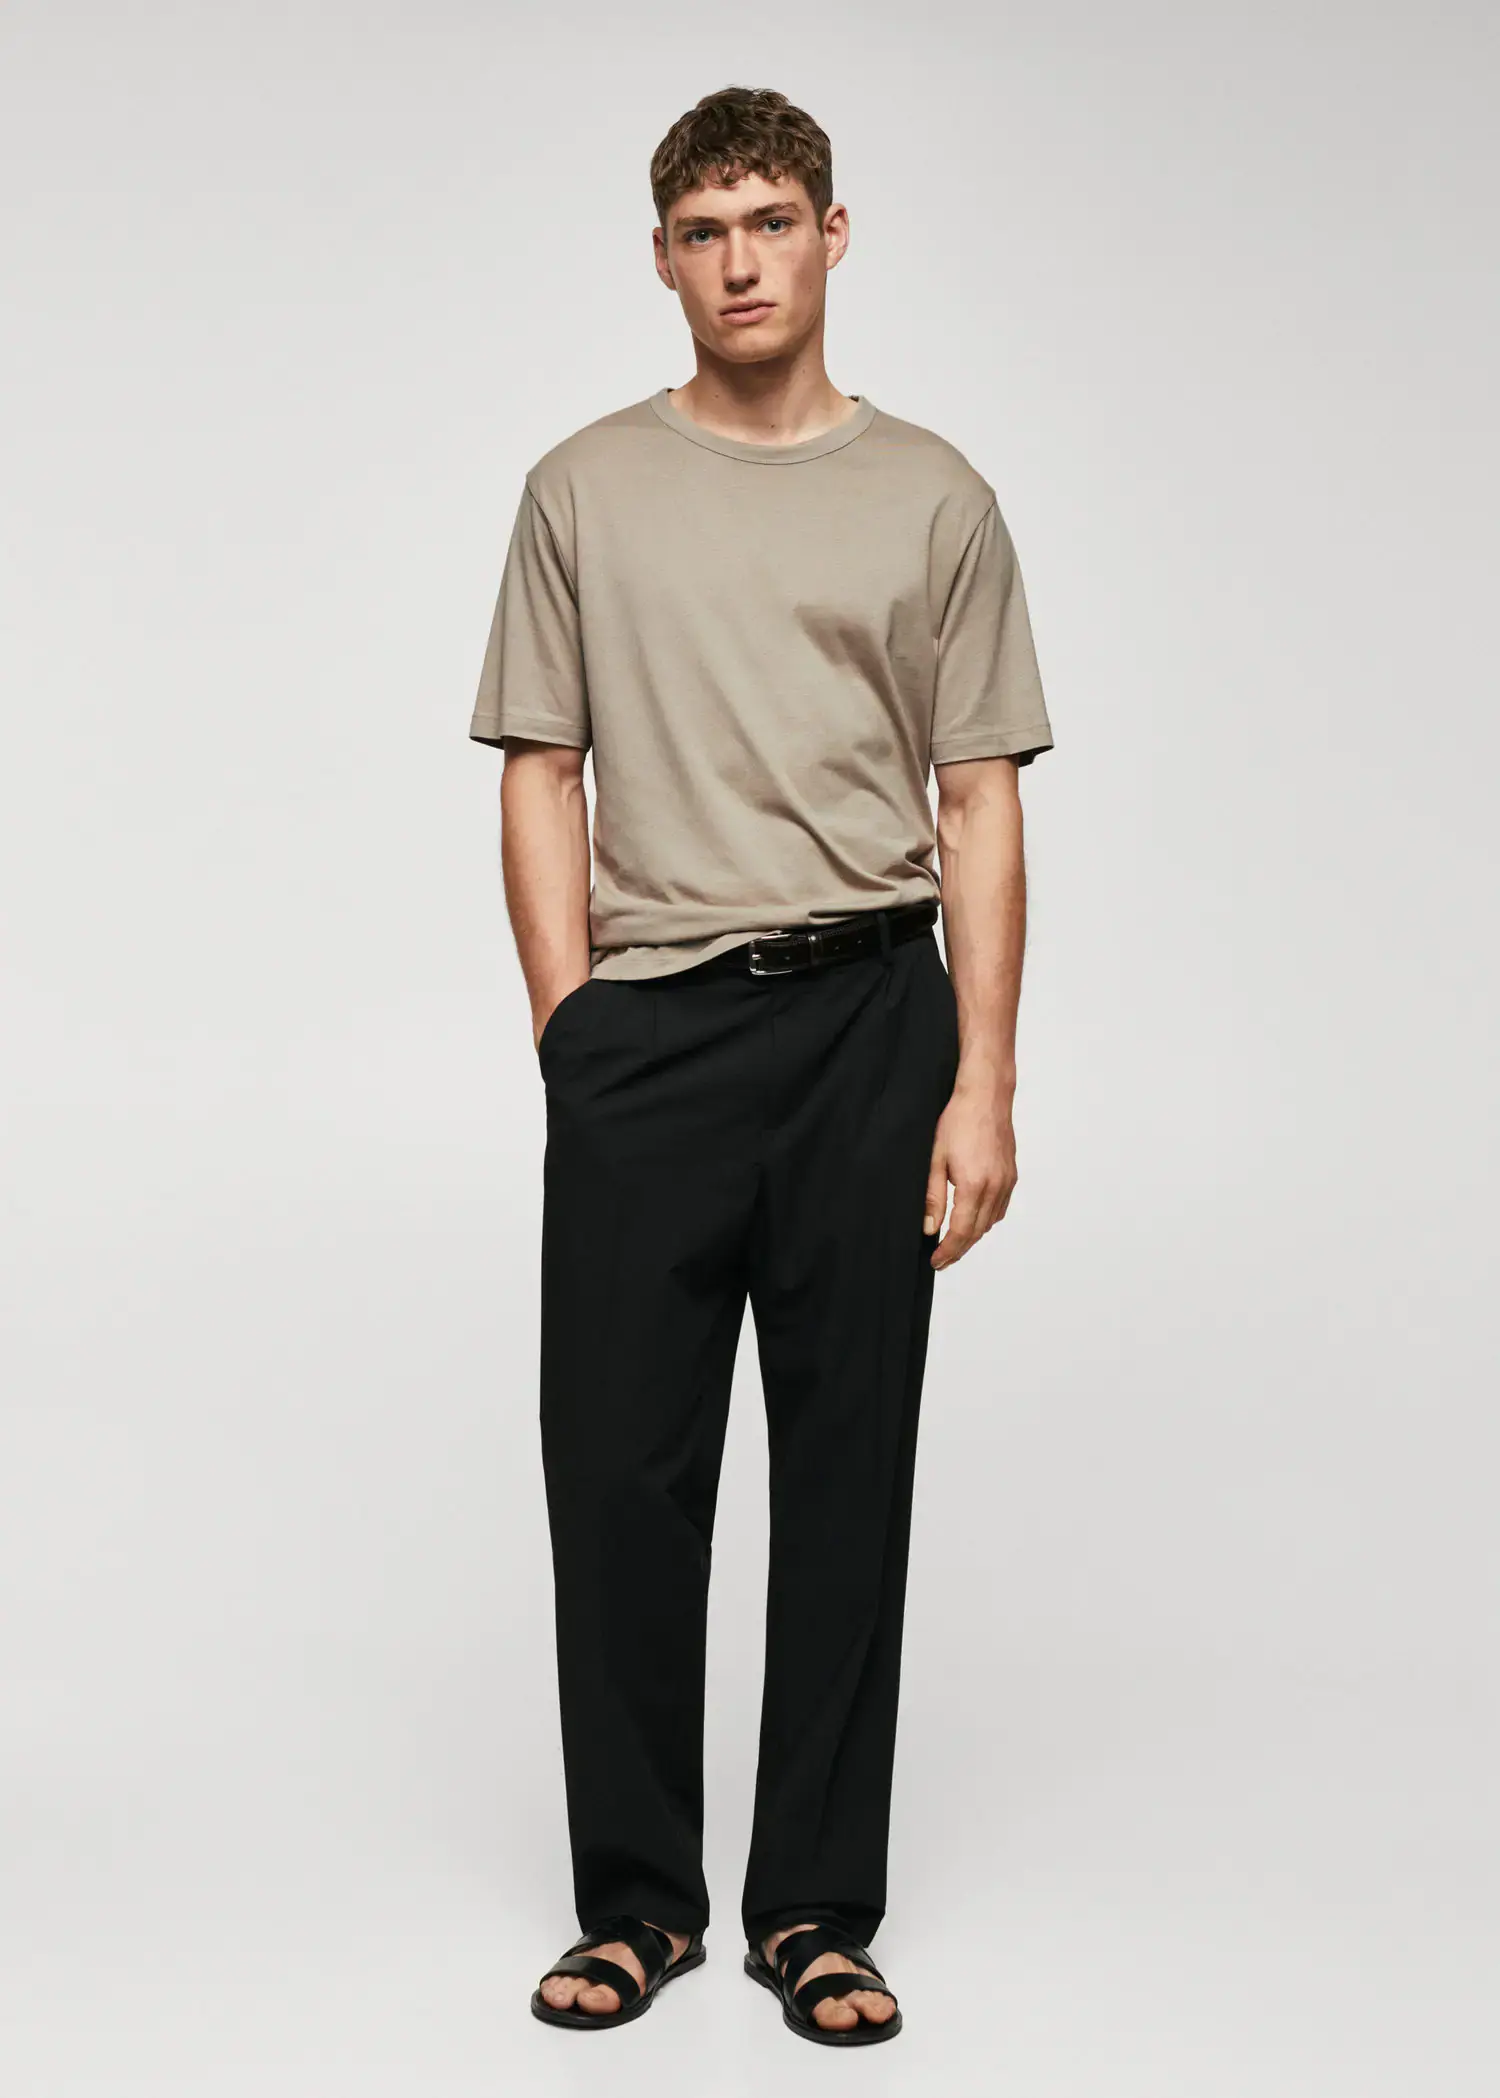 Mango Basic mercerised lightweight shirt. a man in a tan t-shirt and black pants. 